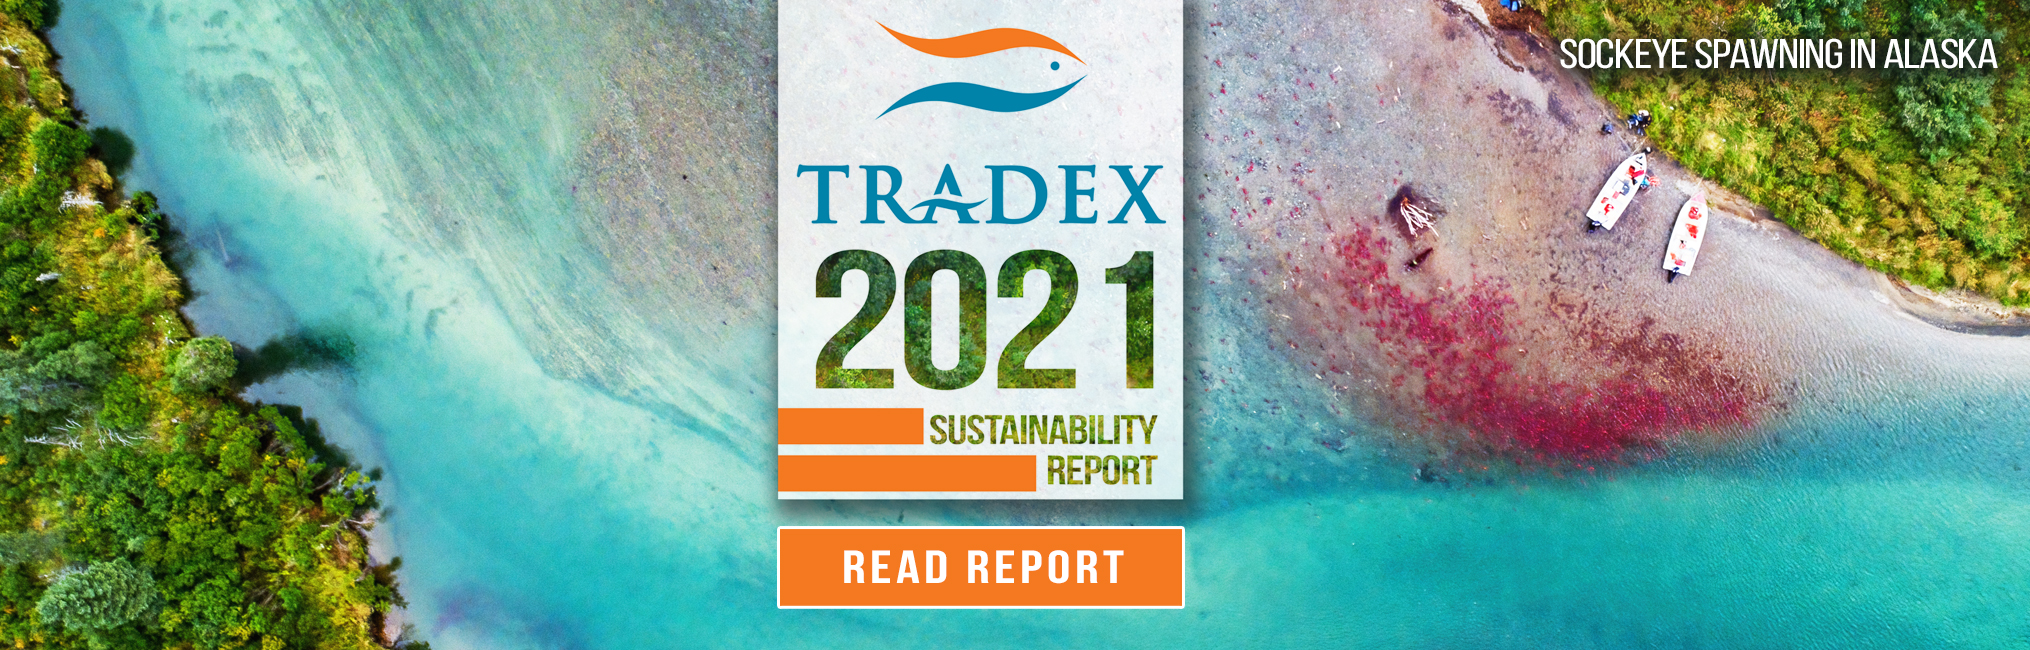 Tradex Foods 2021 Sustainability Report